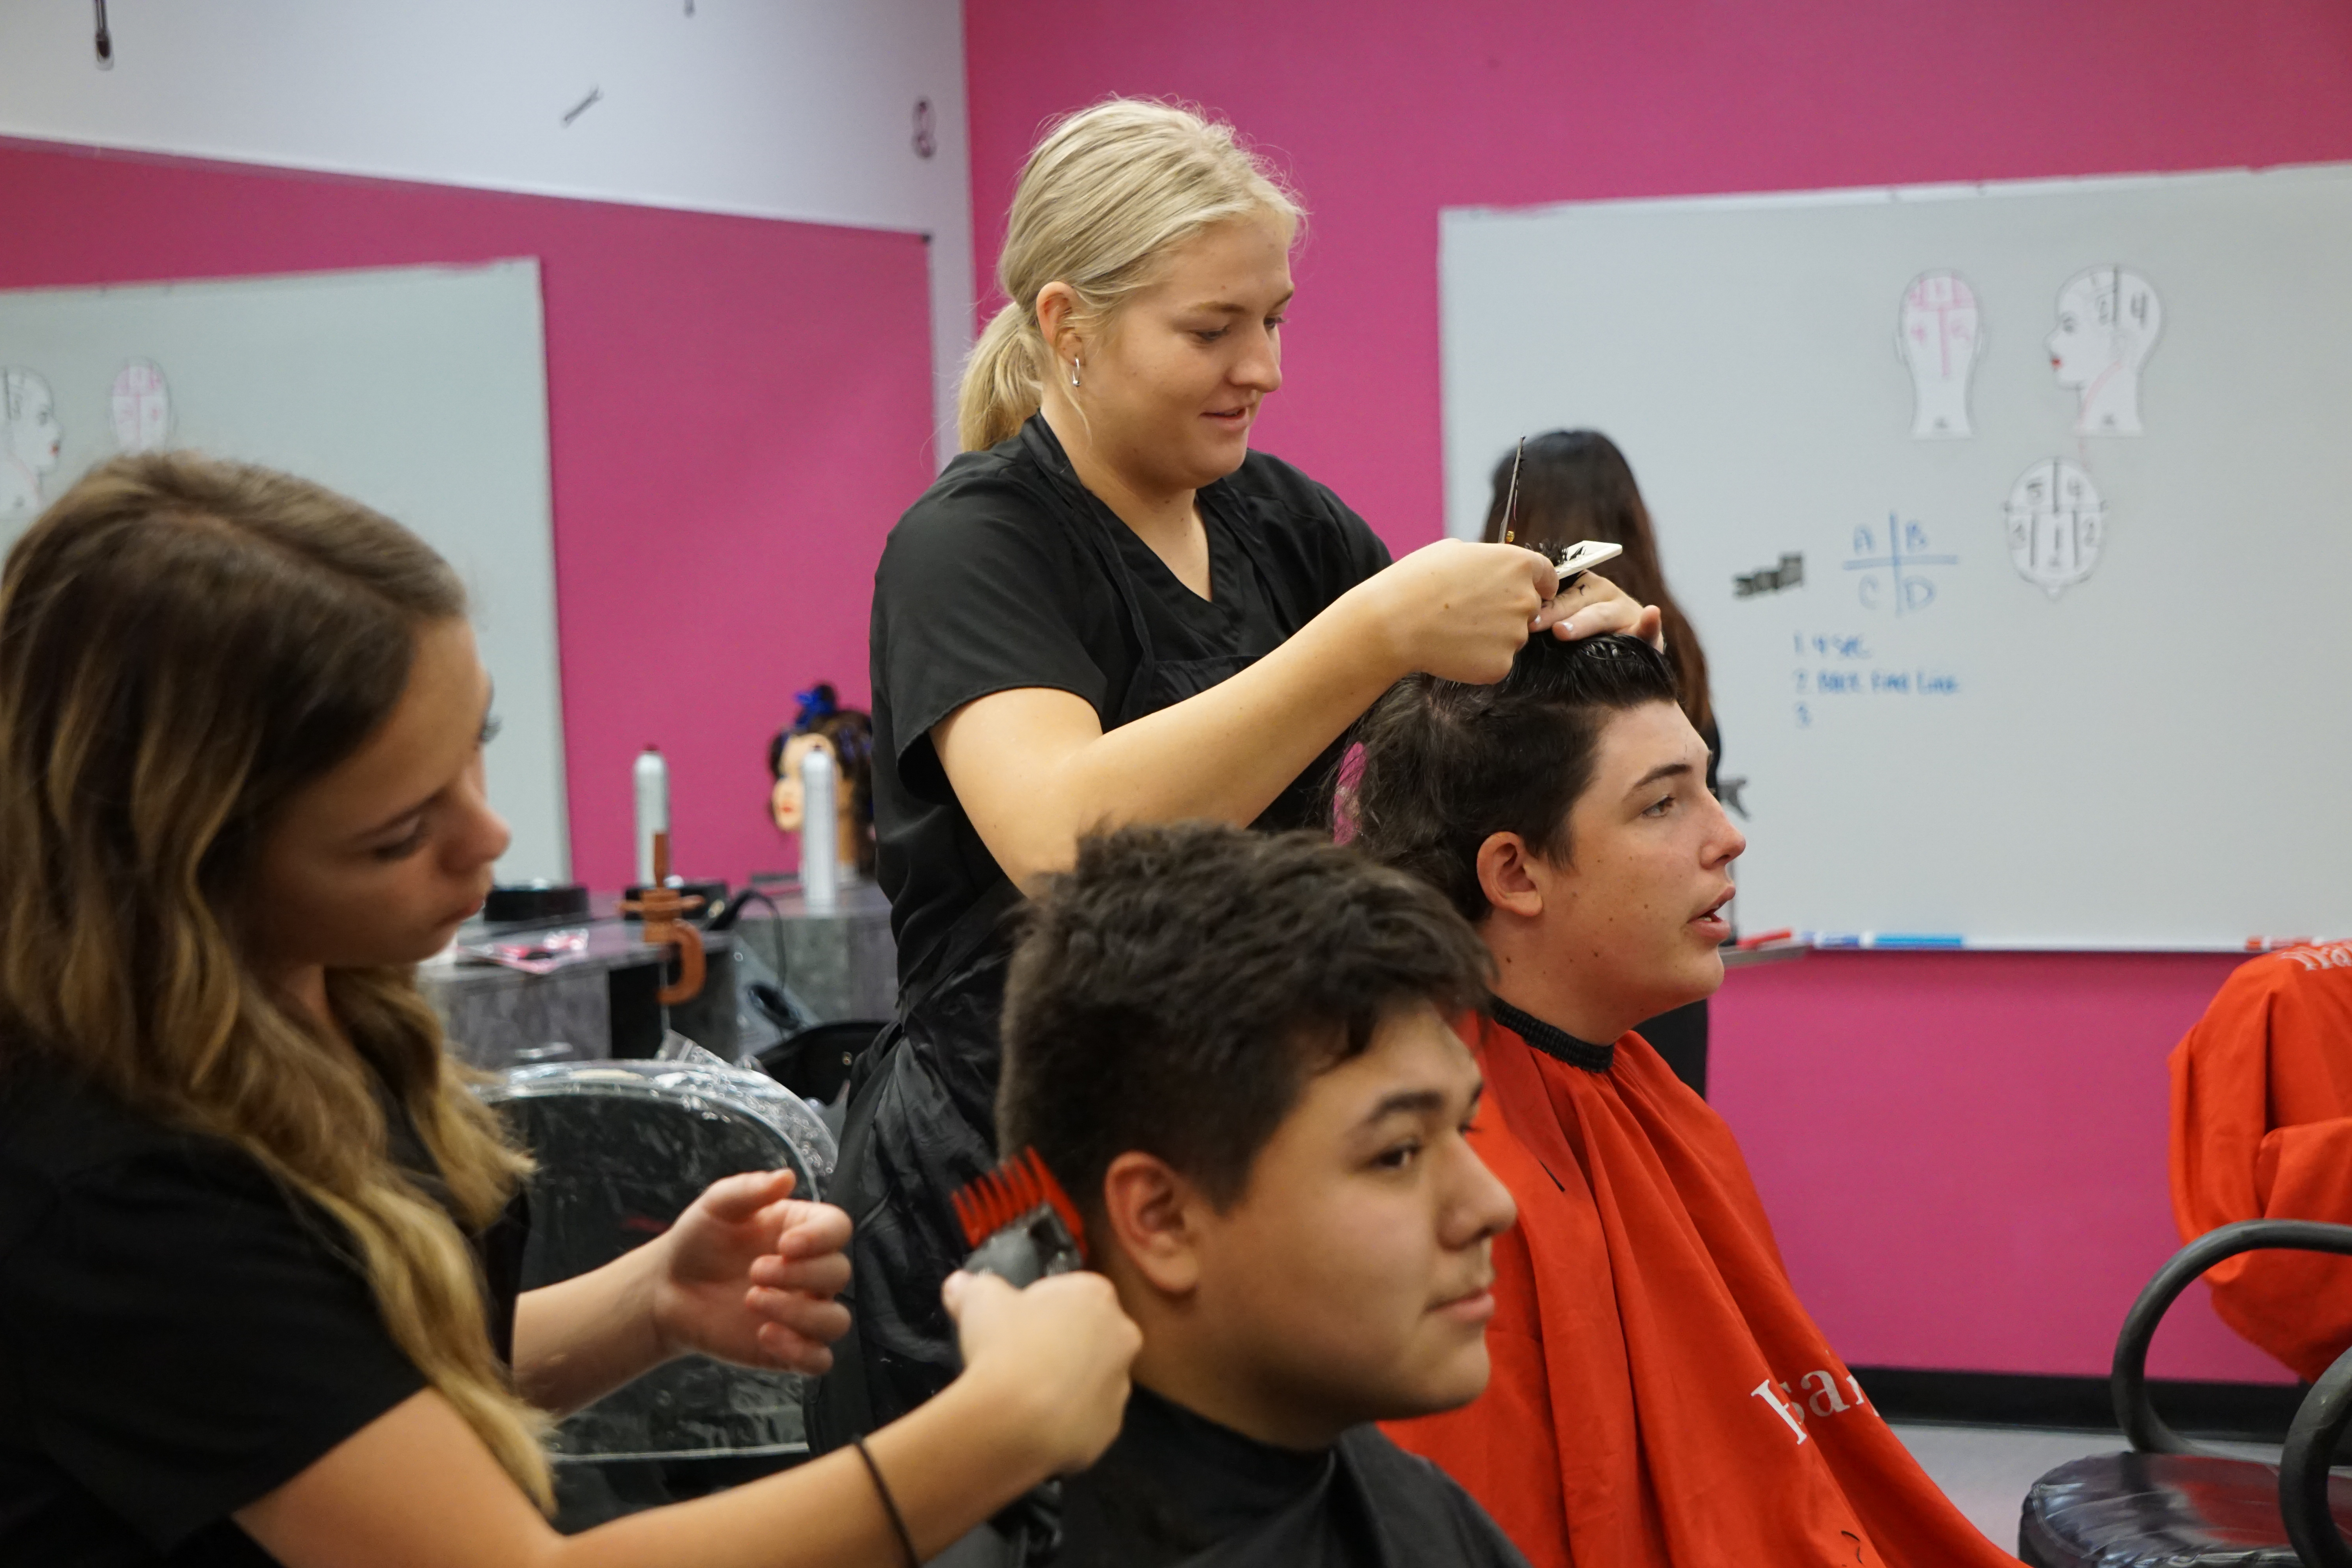 Students cutting hair